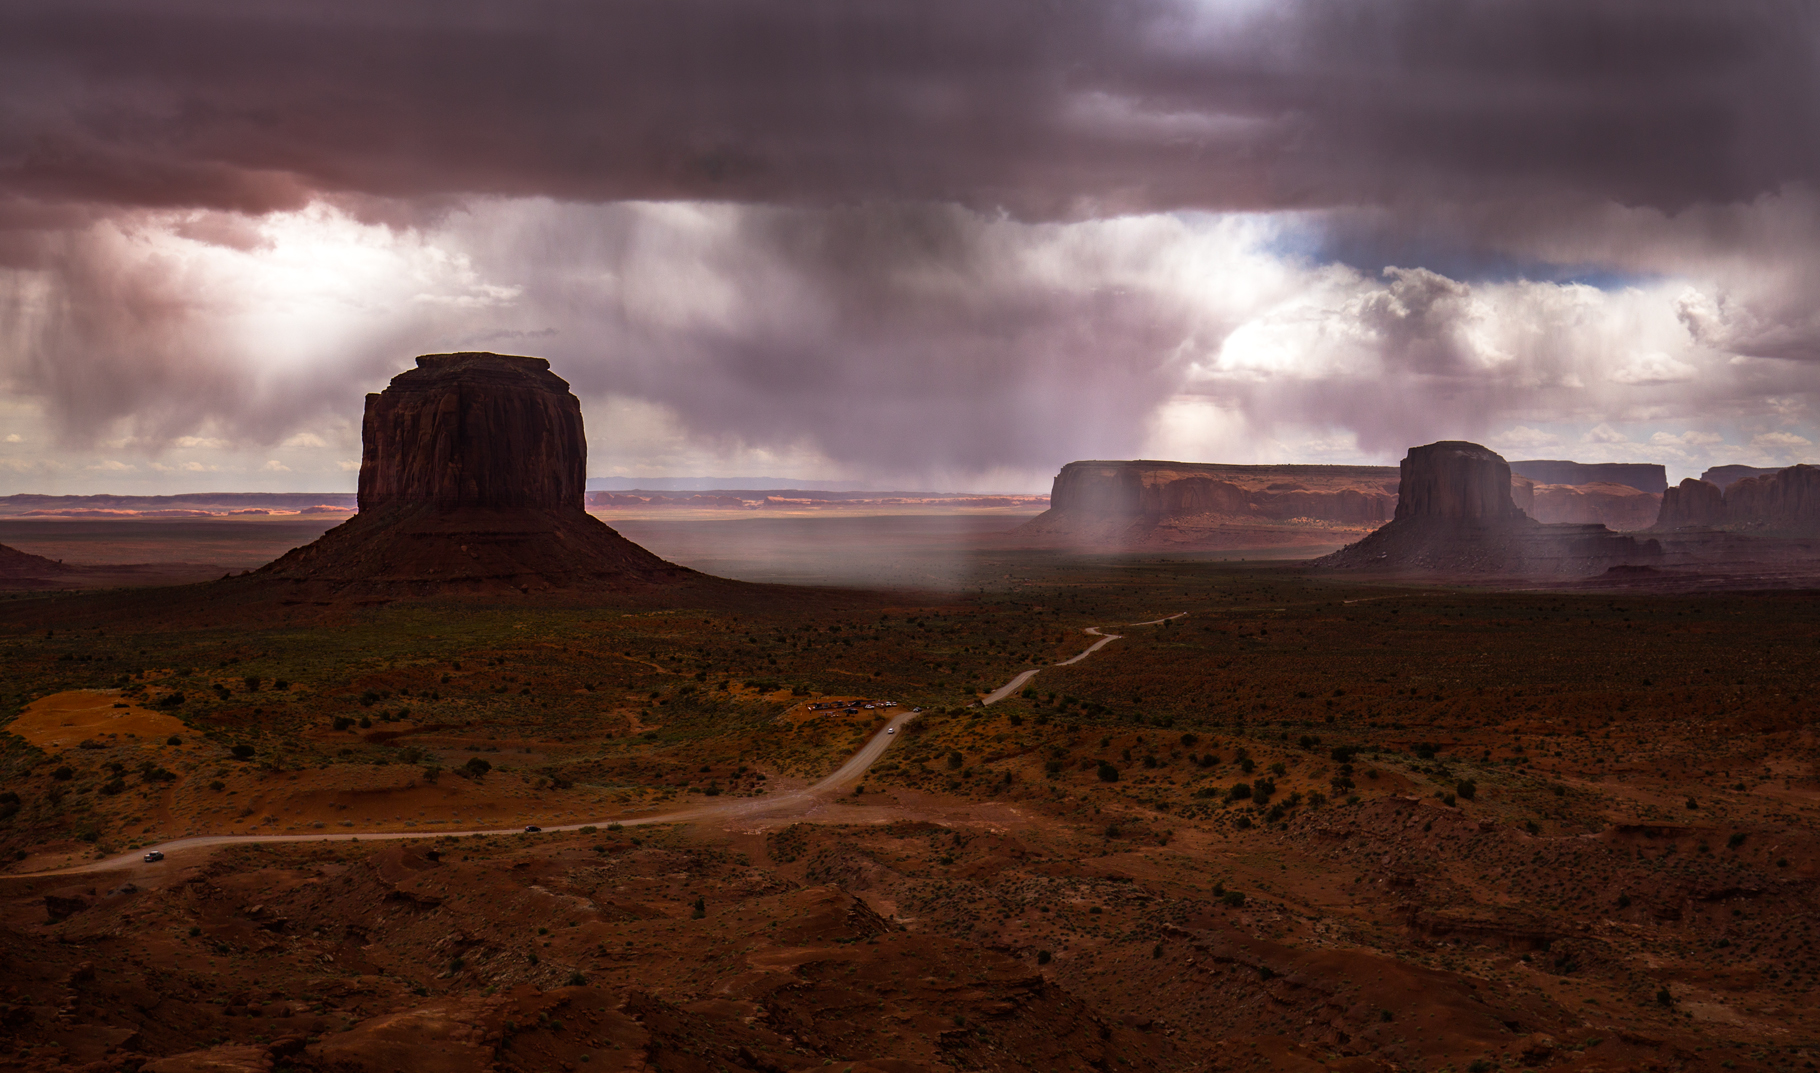 Rain over Monument Valley